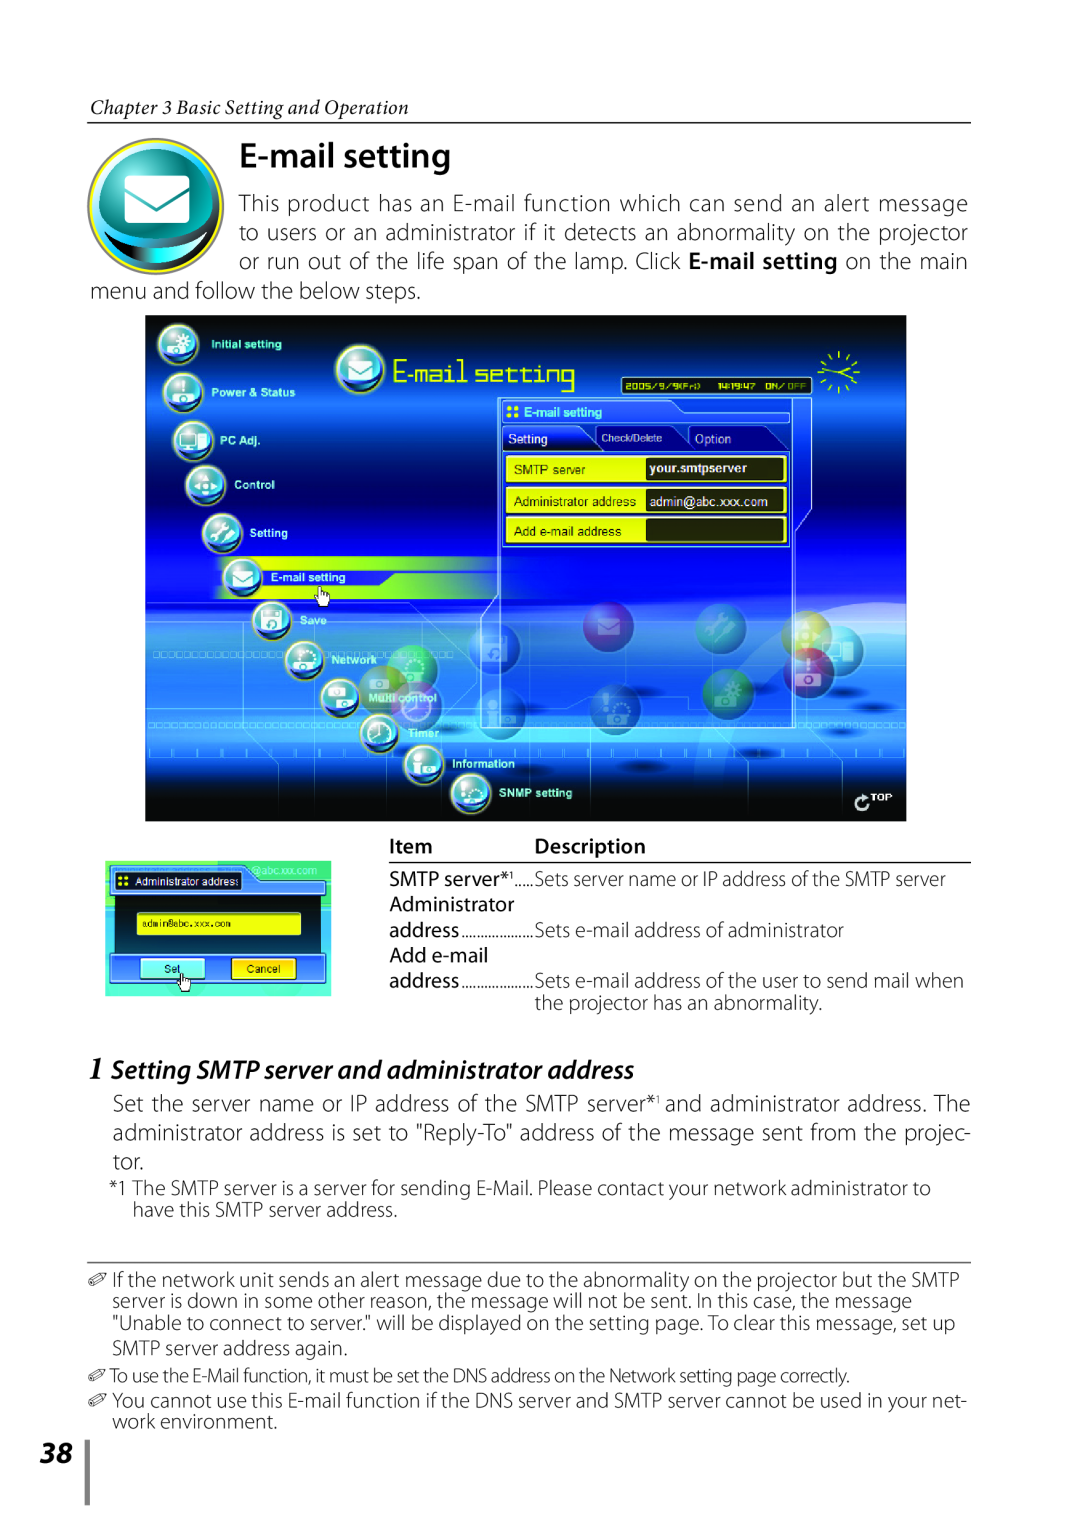 Sanyo POA-PN03C E-mailsetting, 1Setting SMTP server and administrator address, Basic Setting and Operation, Item 